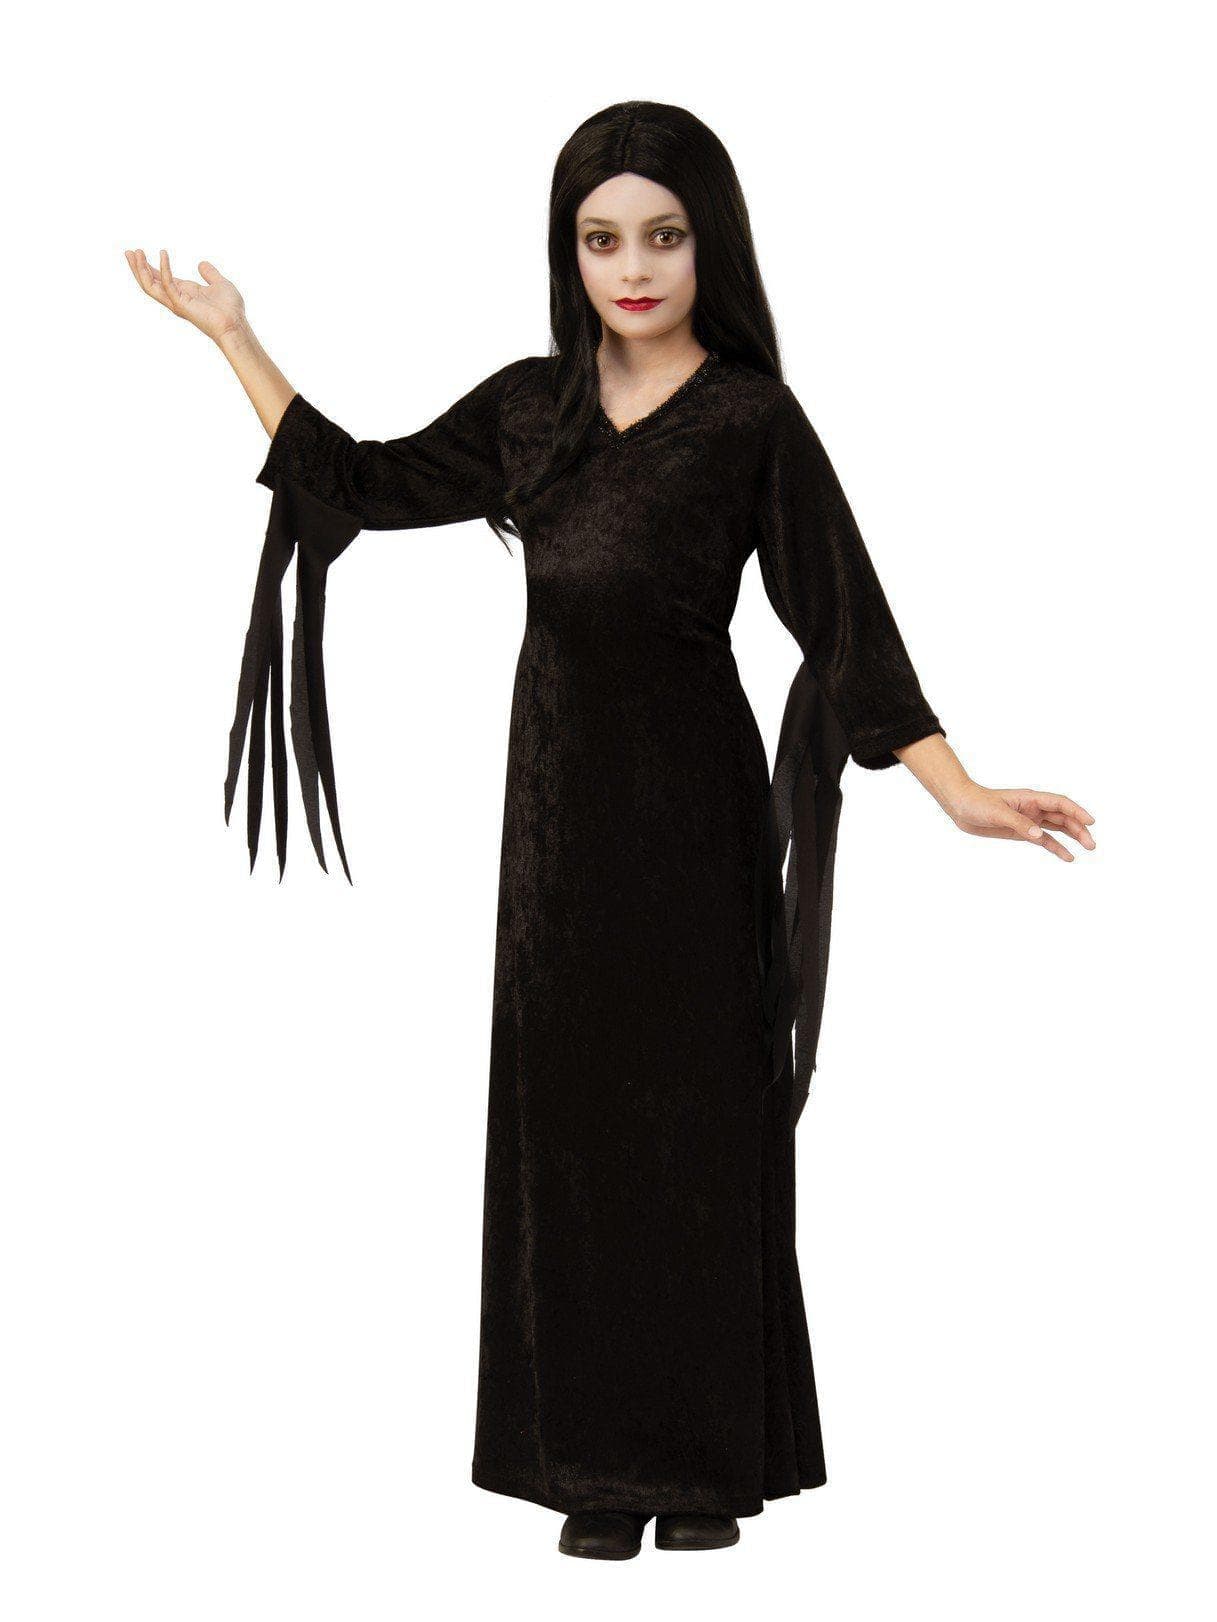 Kids Addams Family Animated Morticia Costume - costumes.com